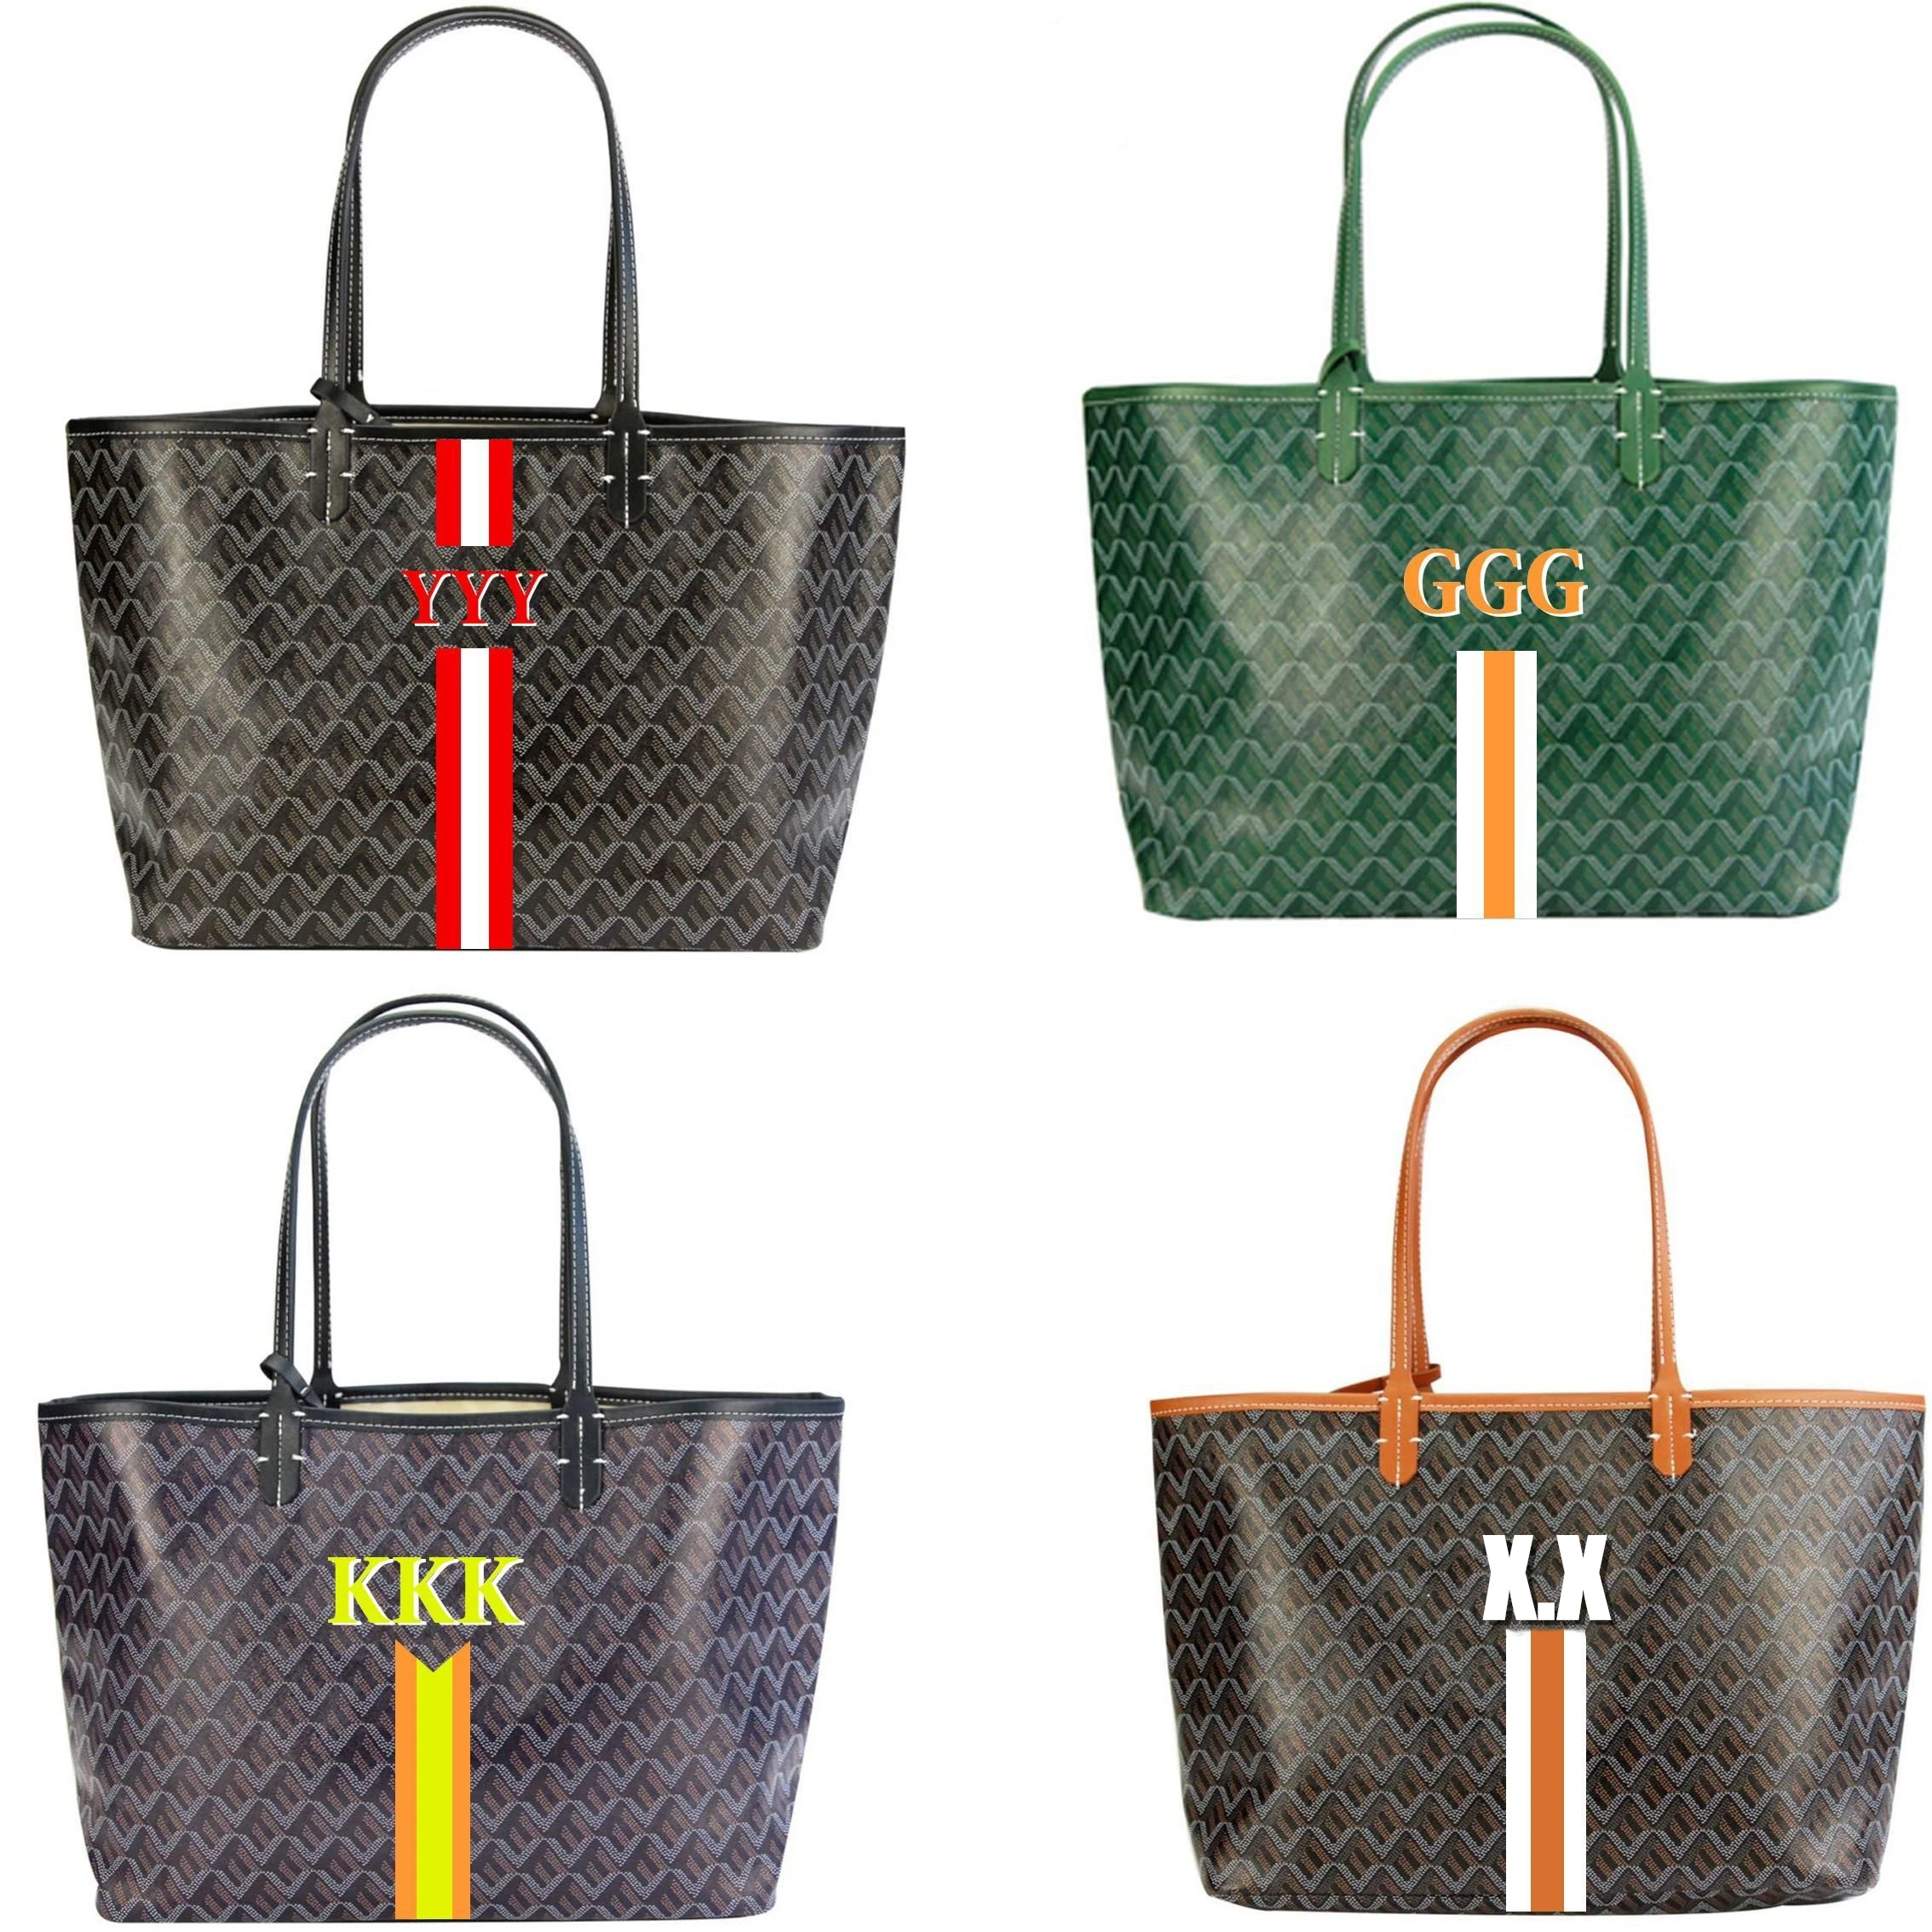 

Dog Goyar Card Holders Clutch handbag Totes Bag DIY handmade Customized handbag personalized bag customizing initials stripes